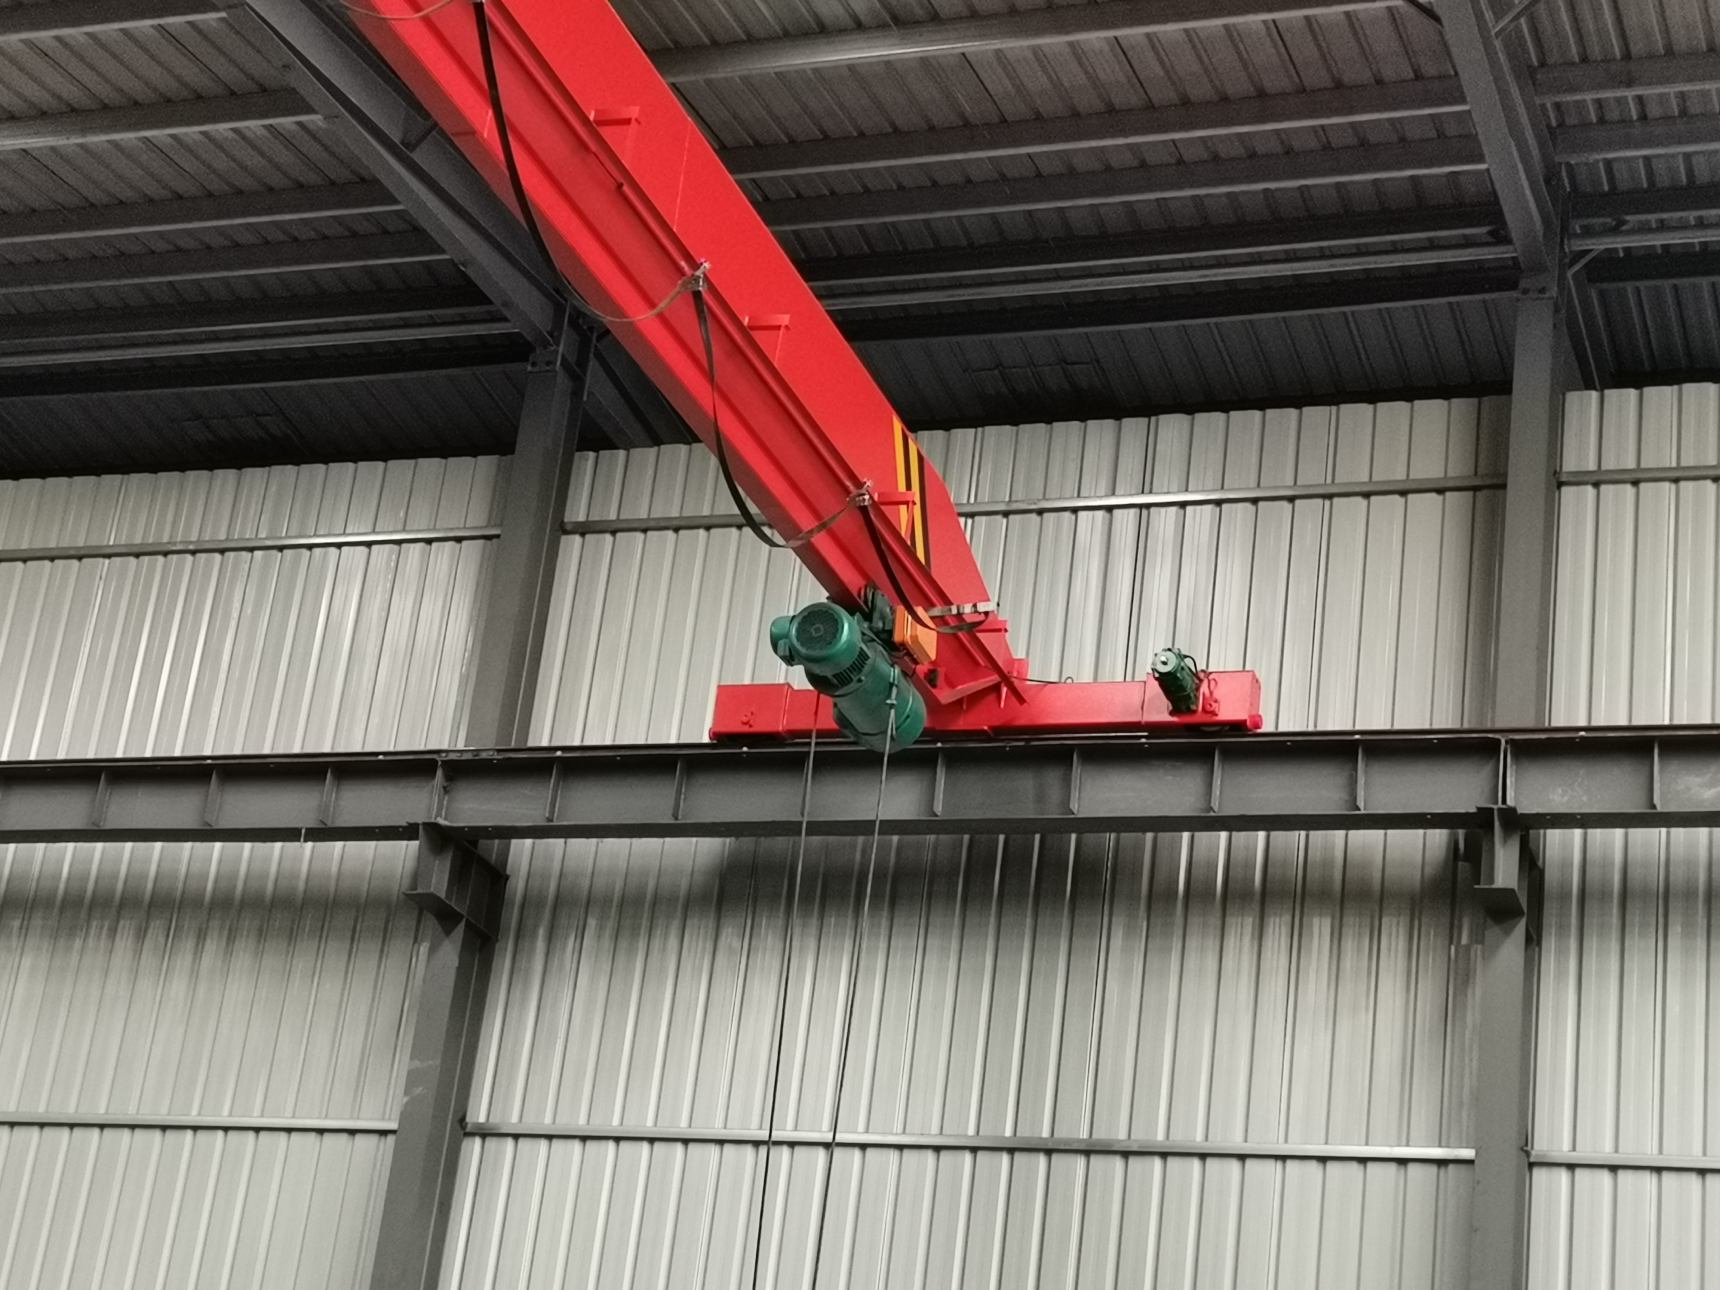 Overhead crane pulley end bracket